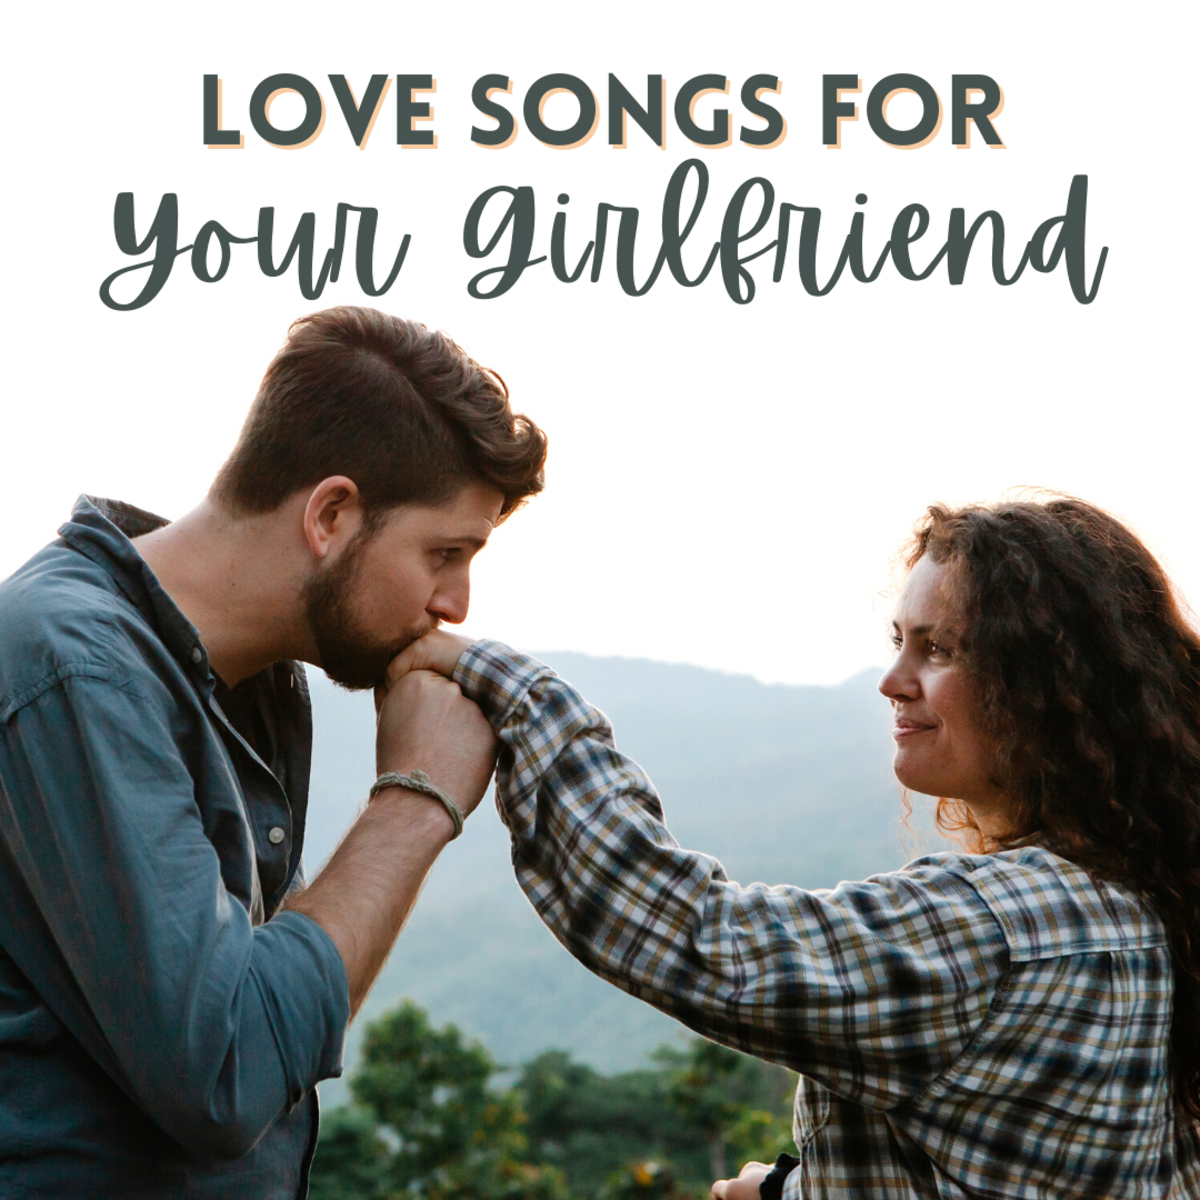 20 Romantic Songs to Serenade Your Girlfriend